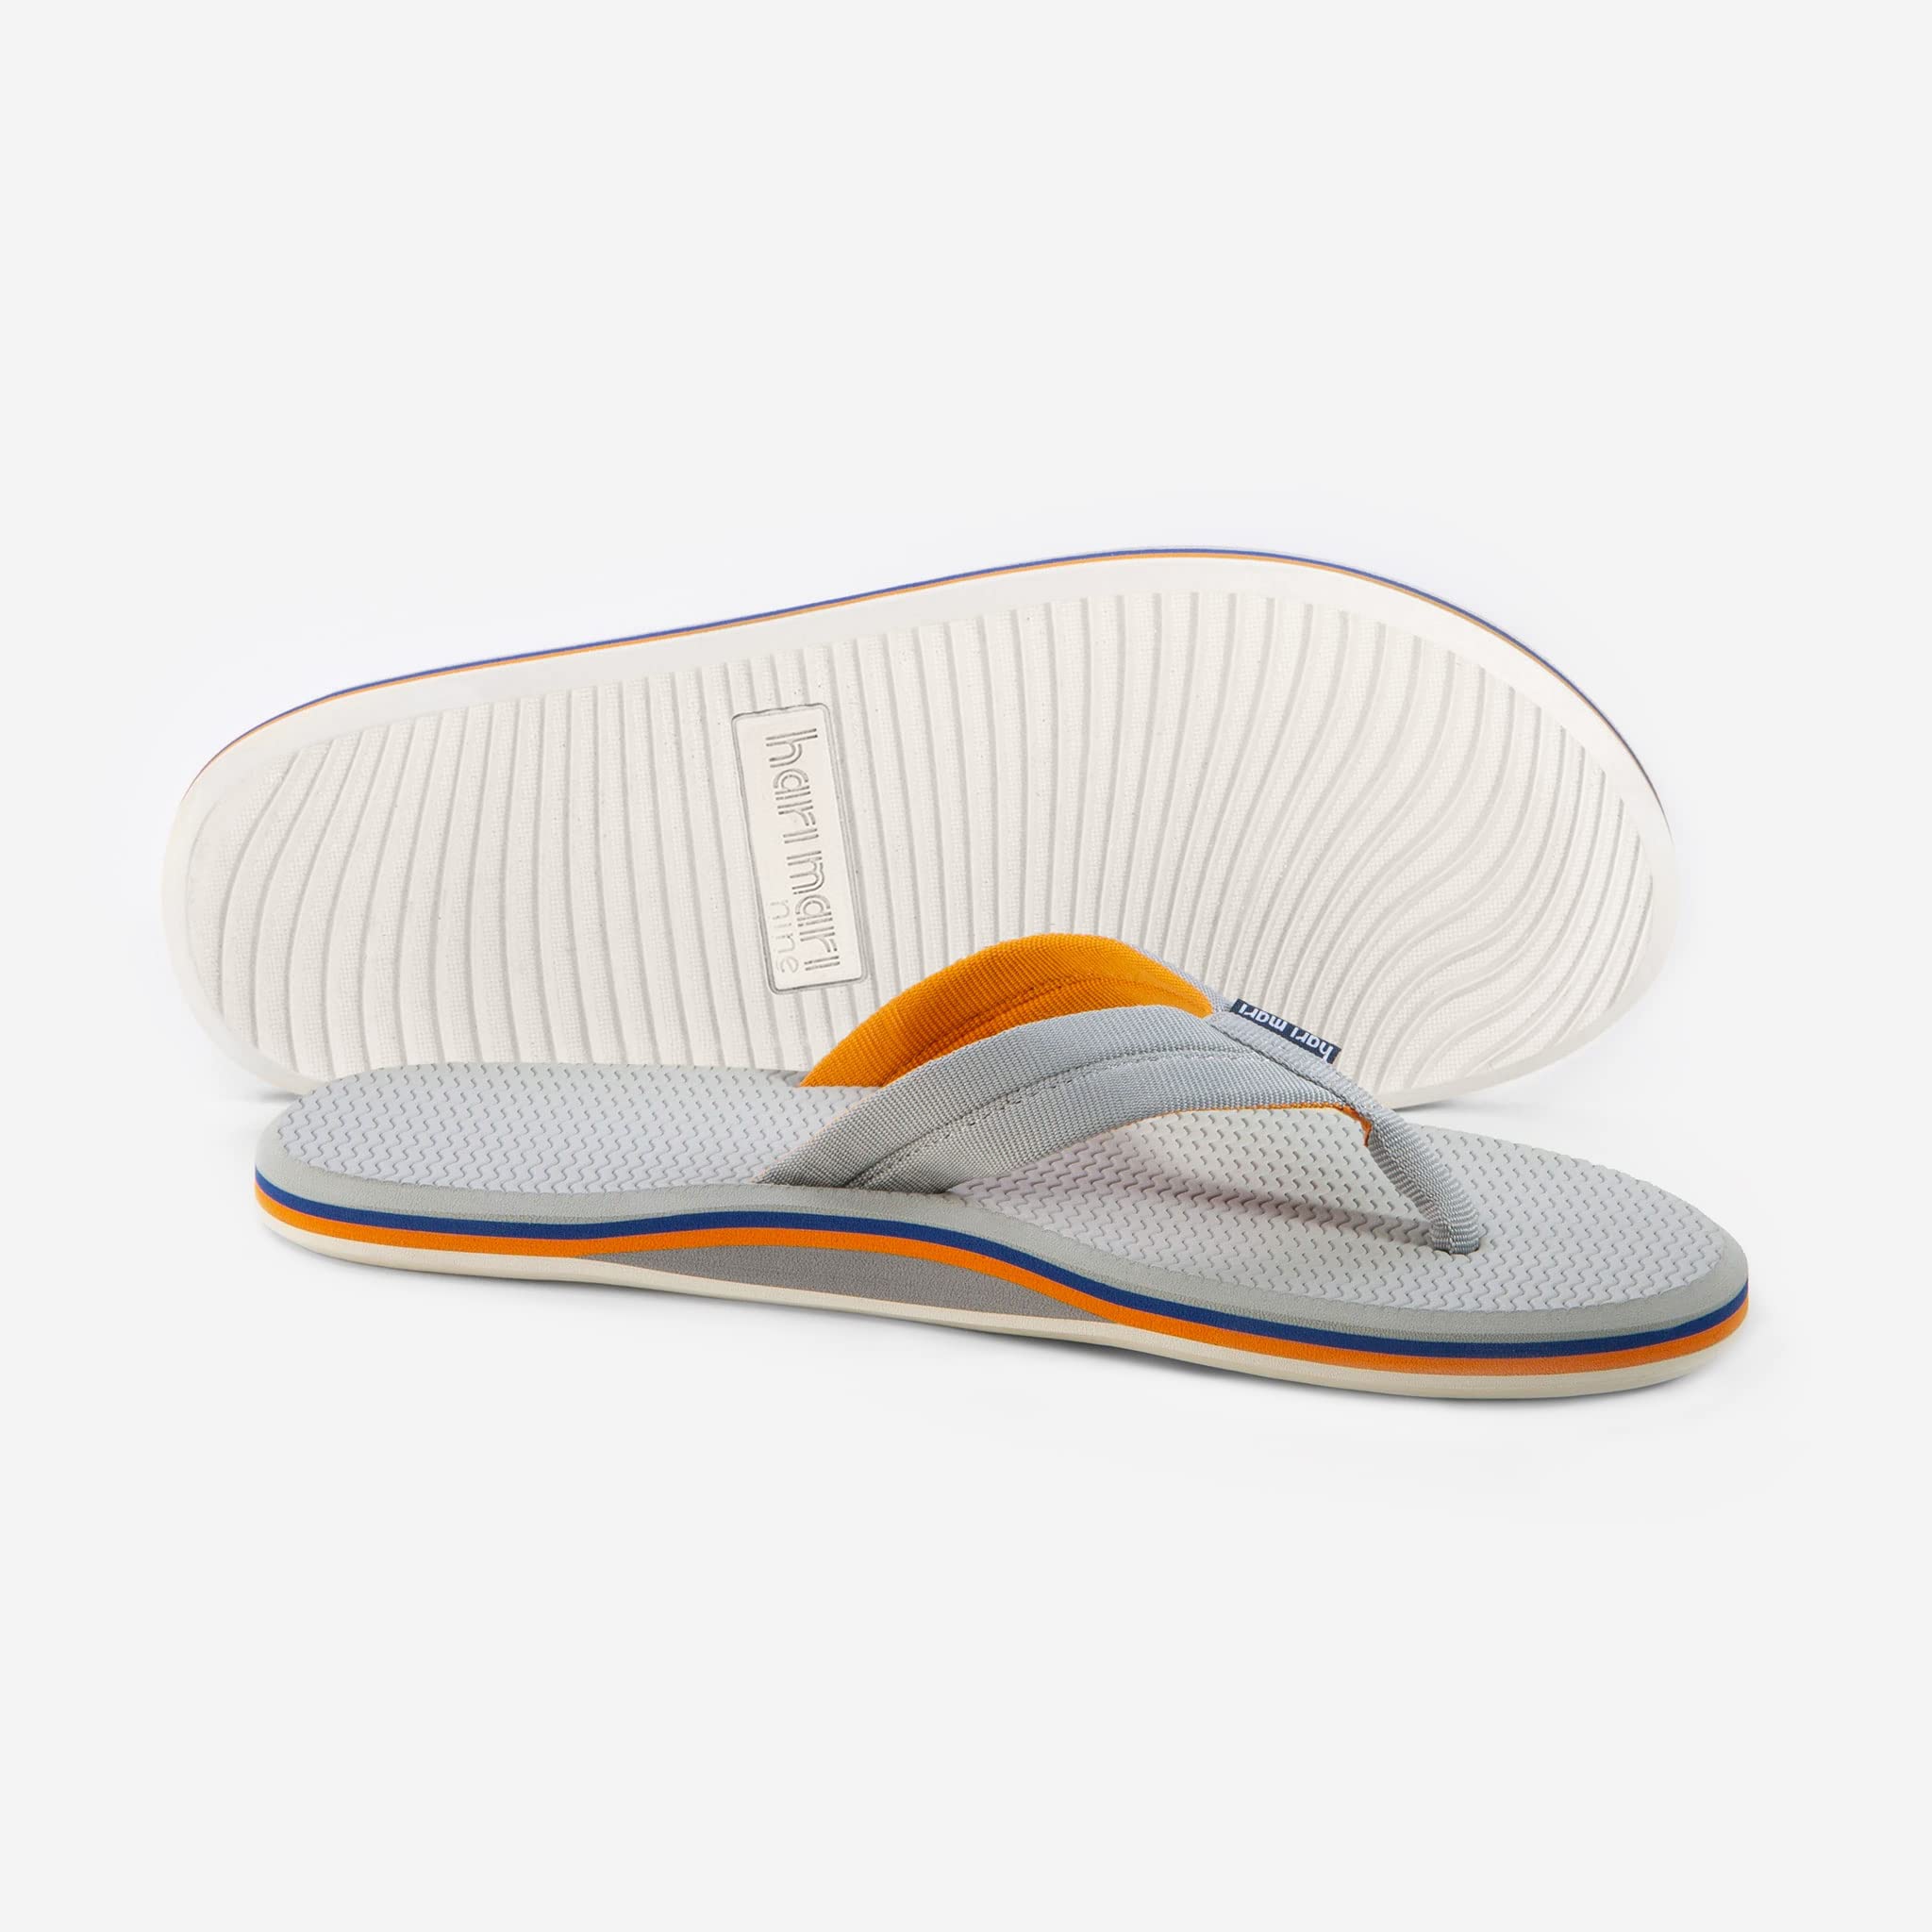 Hari Mari Dunes - Men's Premium Waterproof Flip Flops - Rubber Sandals with Comfortable Memory Foam Straps - Water Ready Summer Shoes for Men